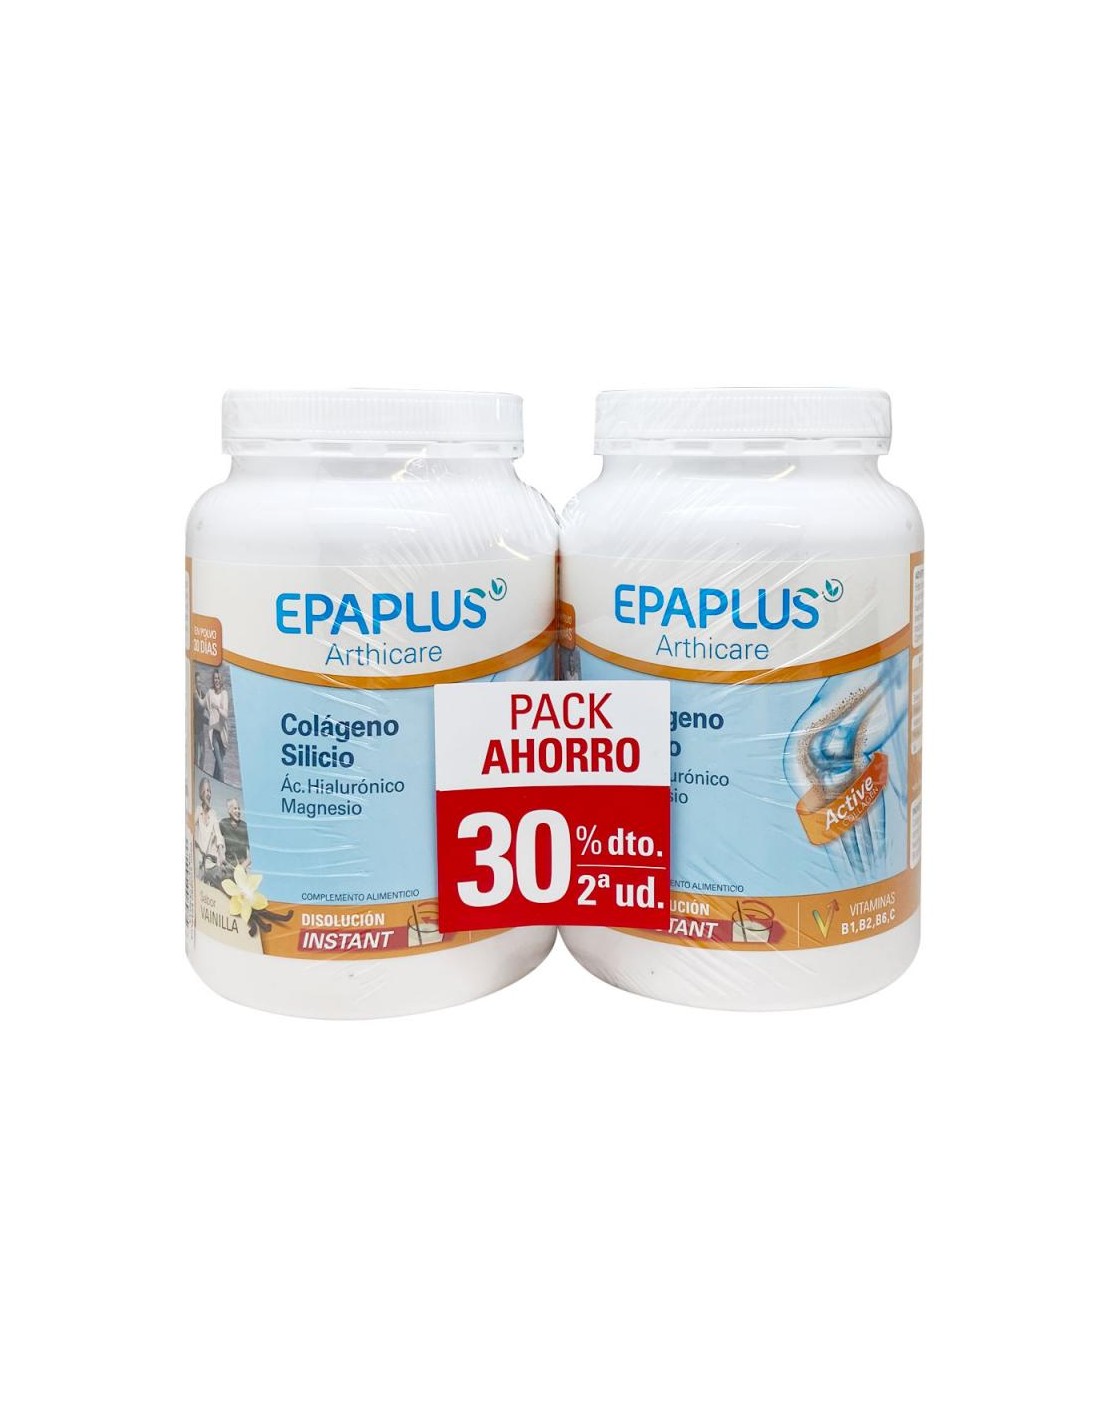 Epaplus Arthicare Colágeno + silicio sabor limón 2 x 334 gr pack ahorro